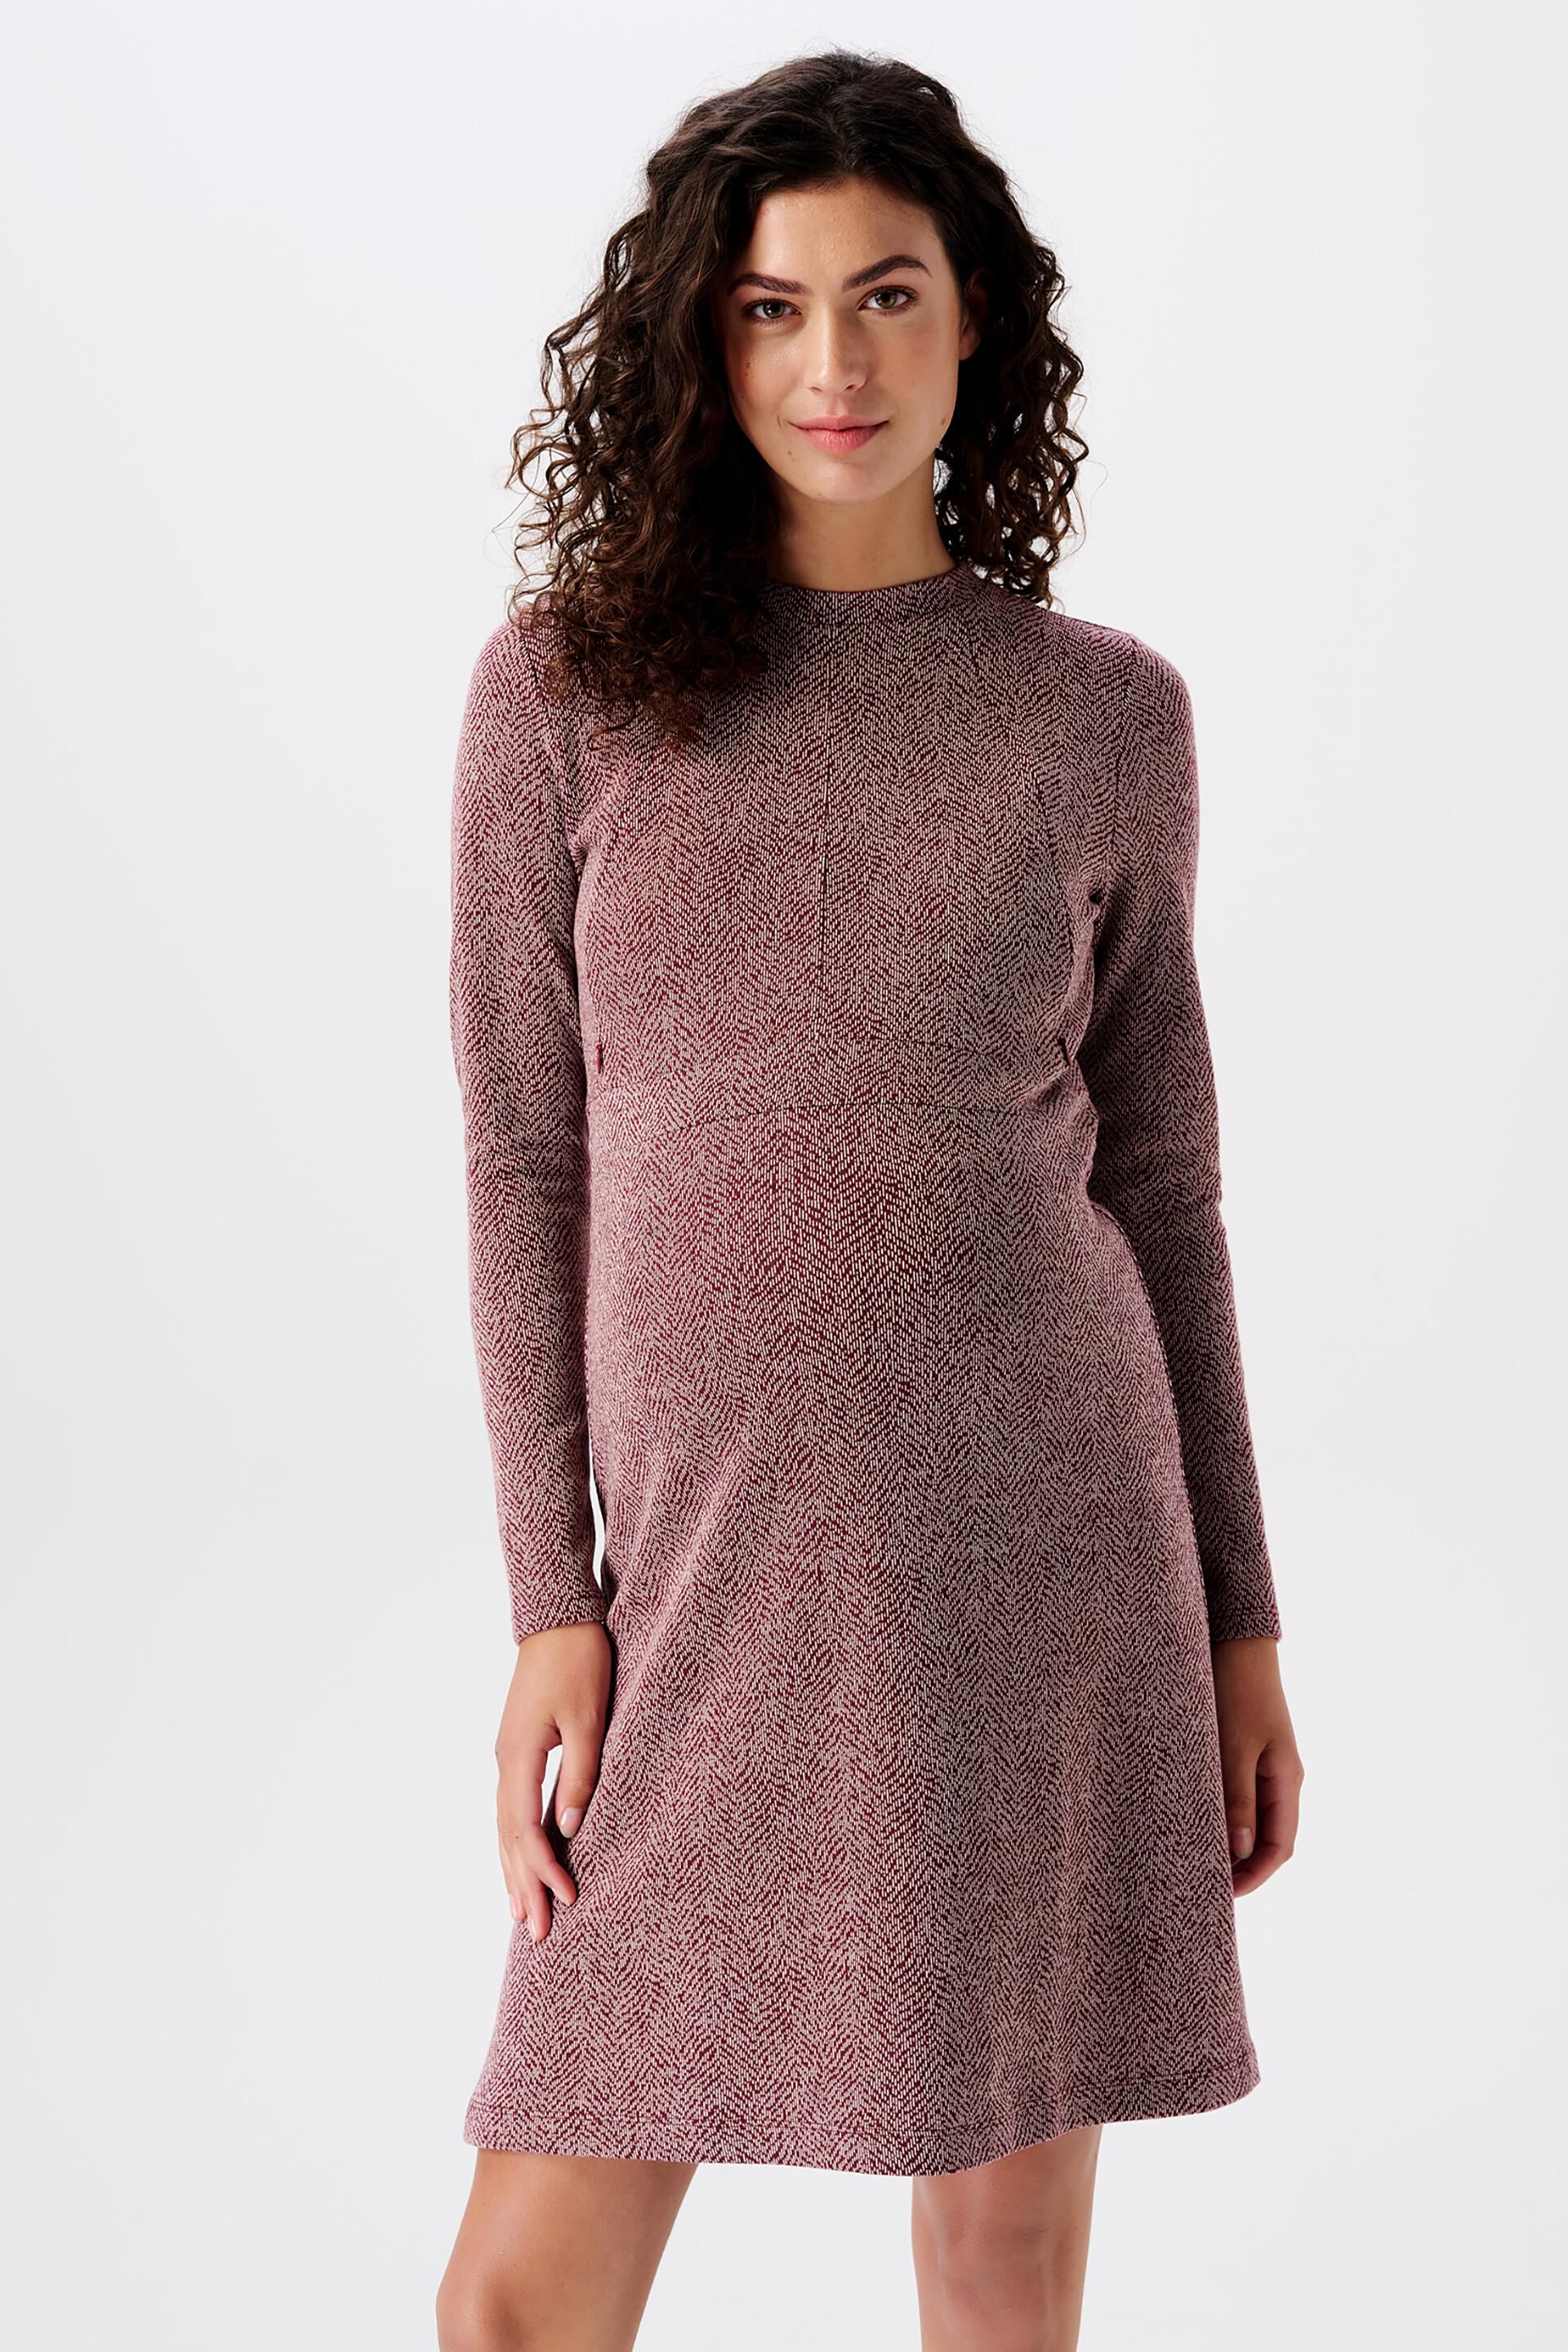 Shop Esprit Dresses knitted